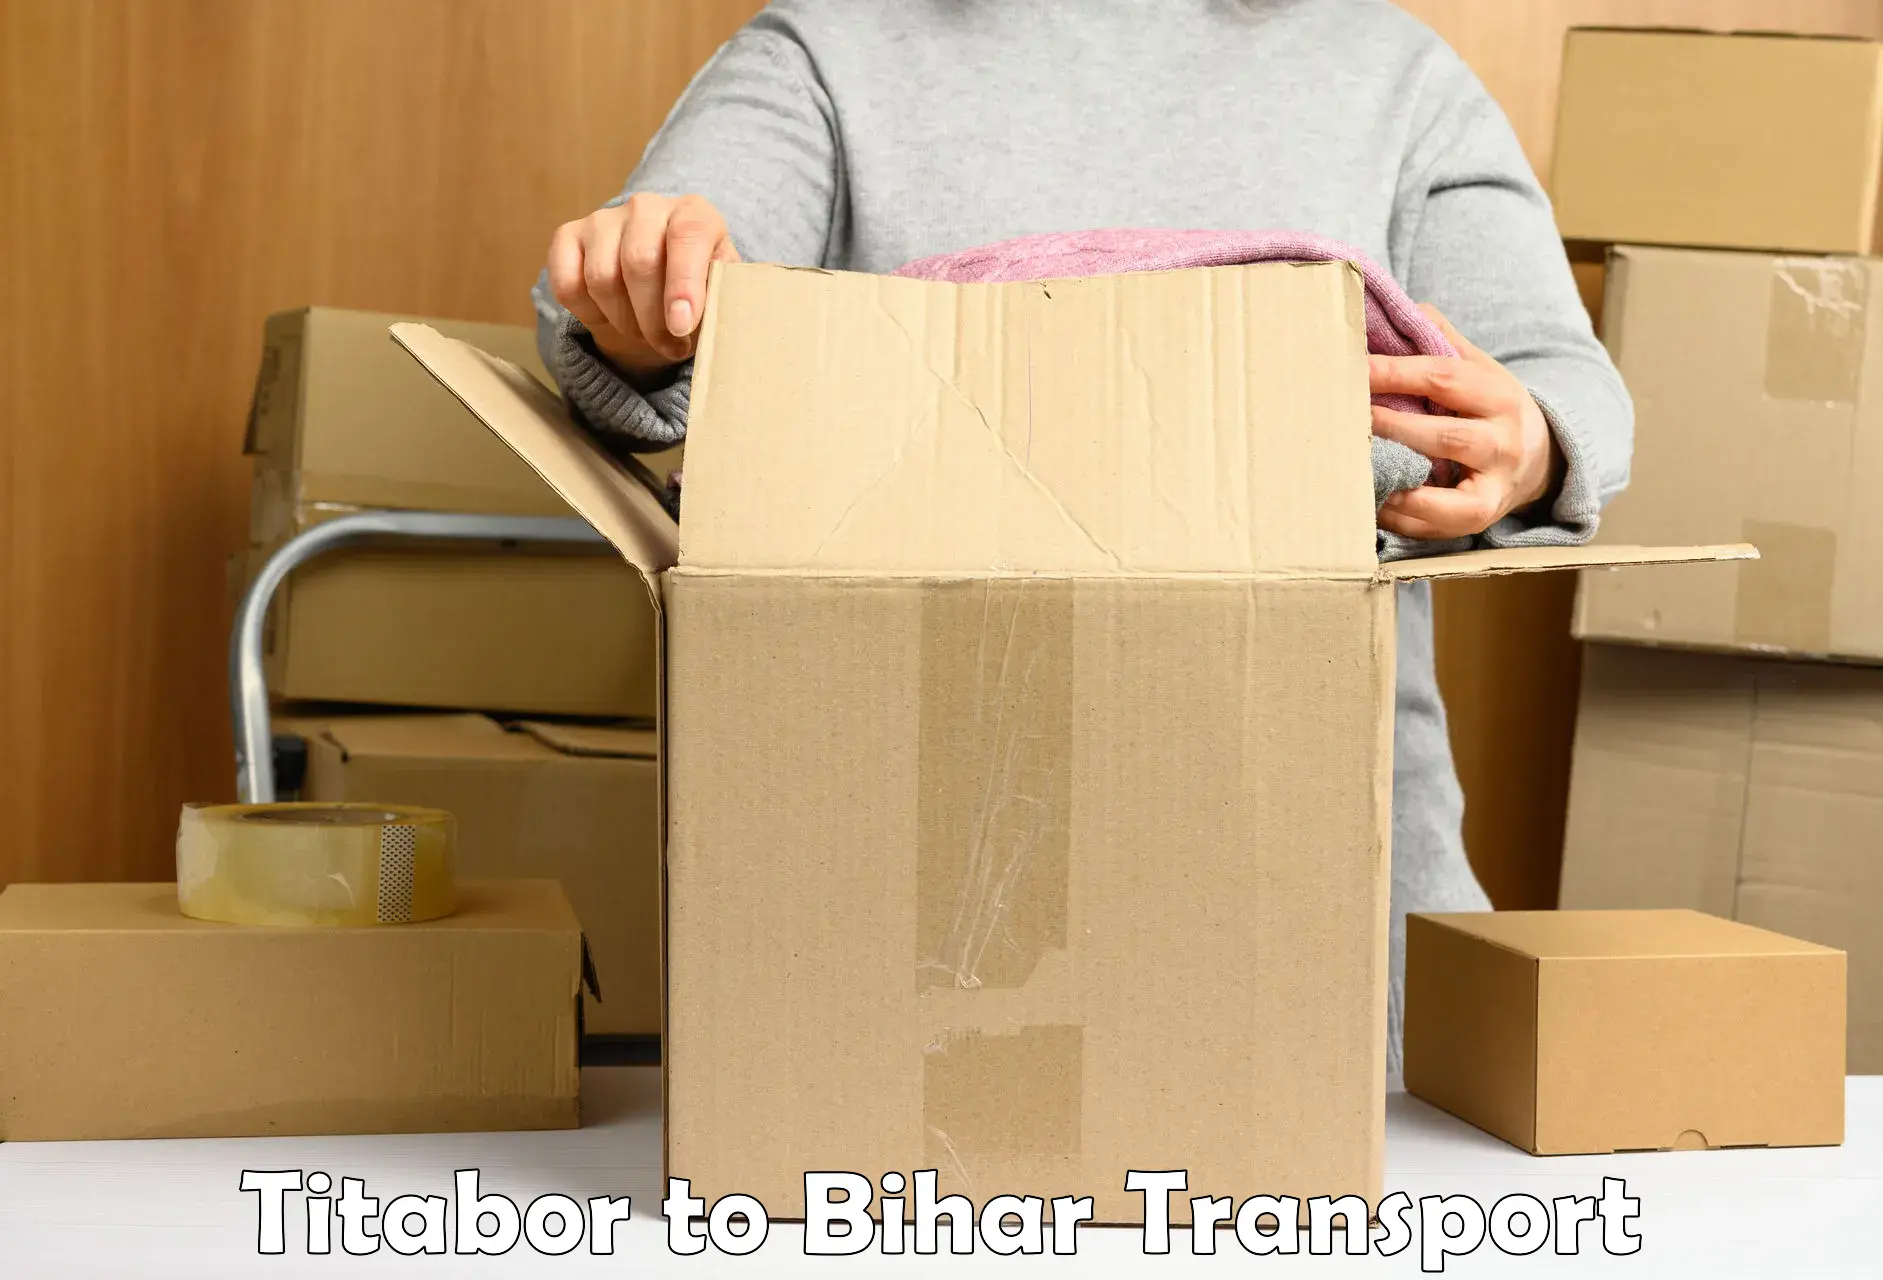 Transport in sharing Titabor to Bihar